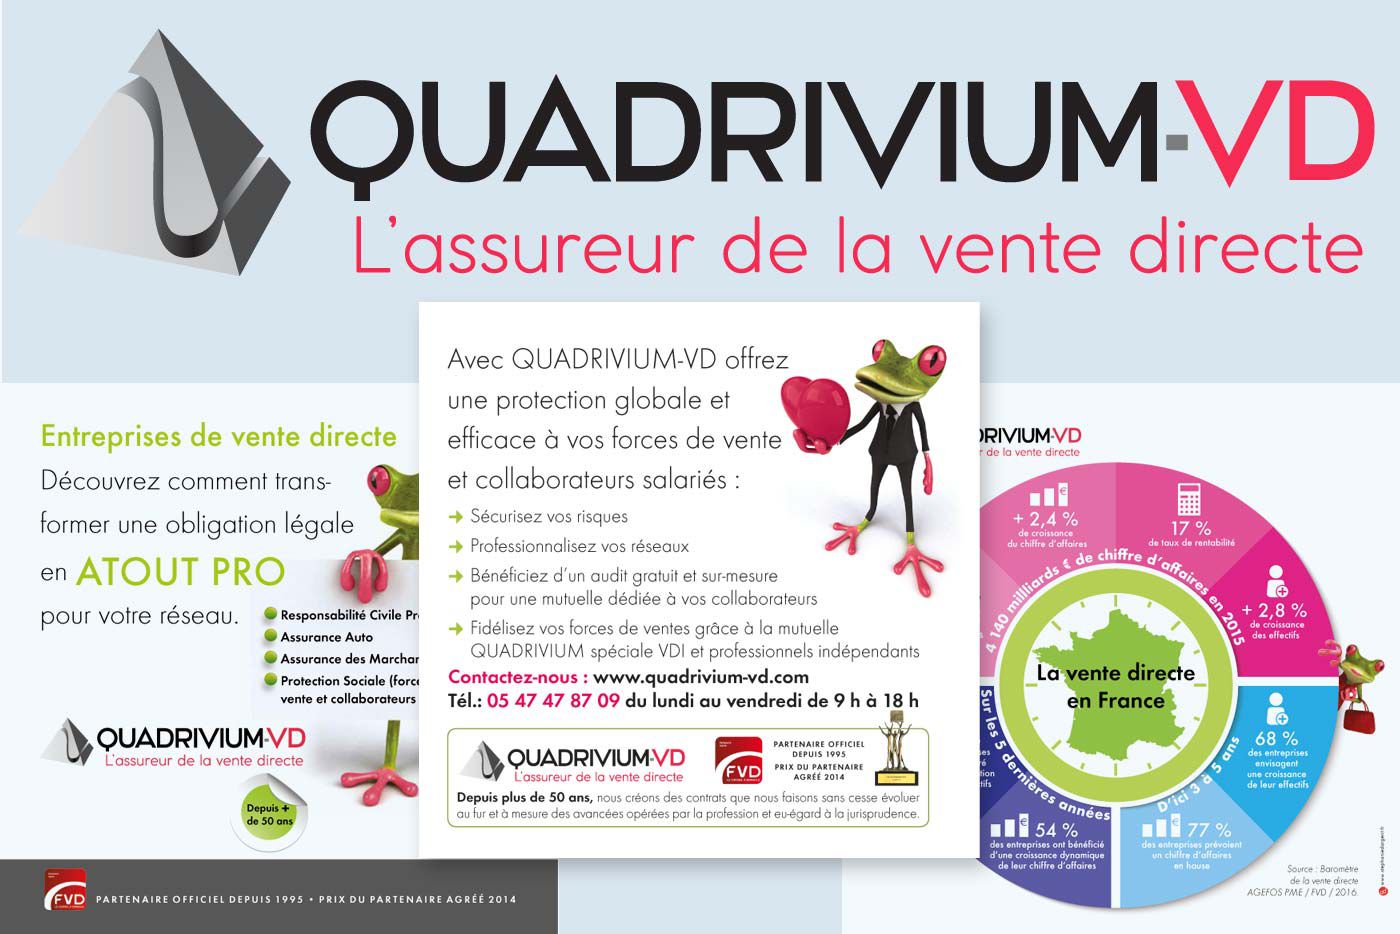 Quadrivium-VD, L'assureur de la vente directe